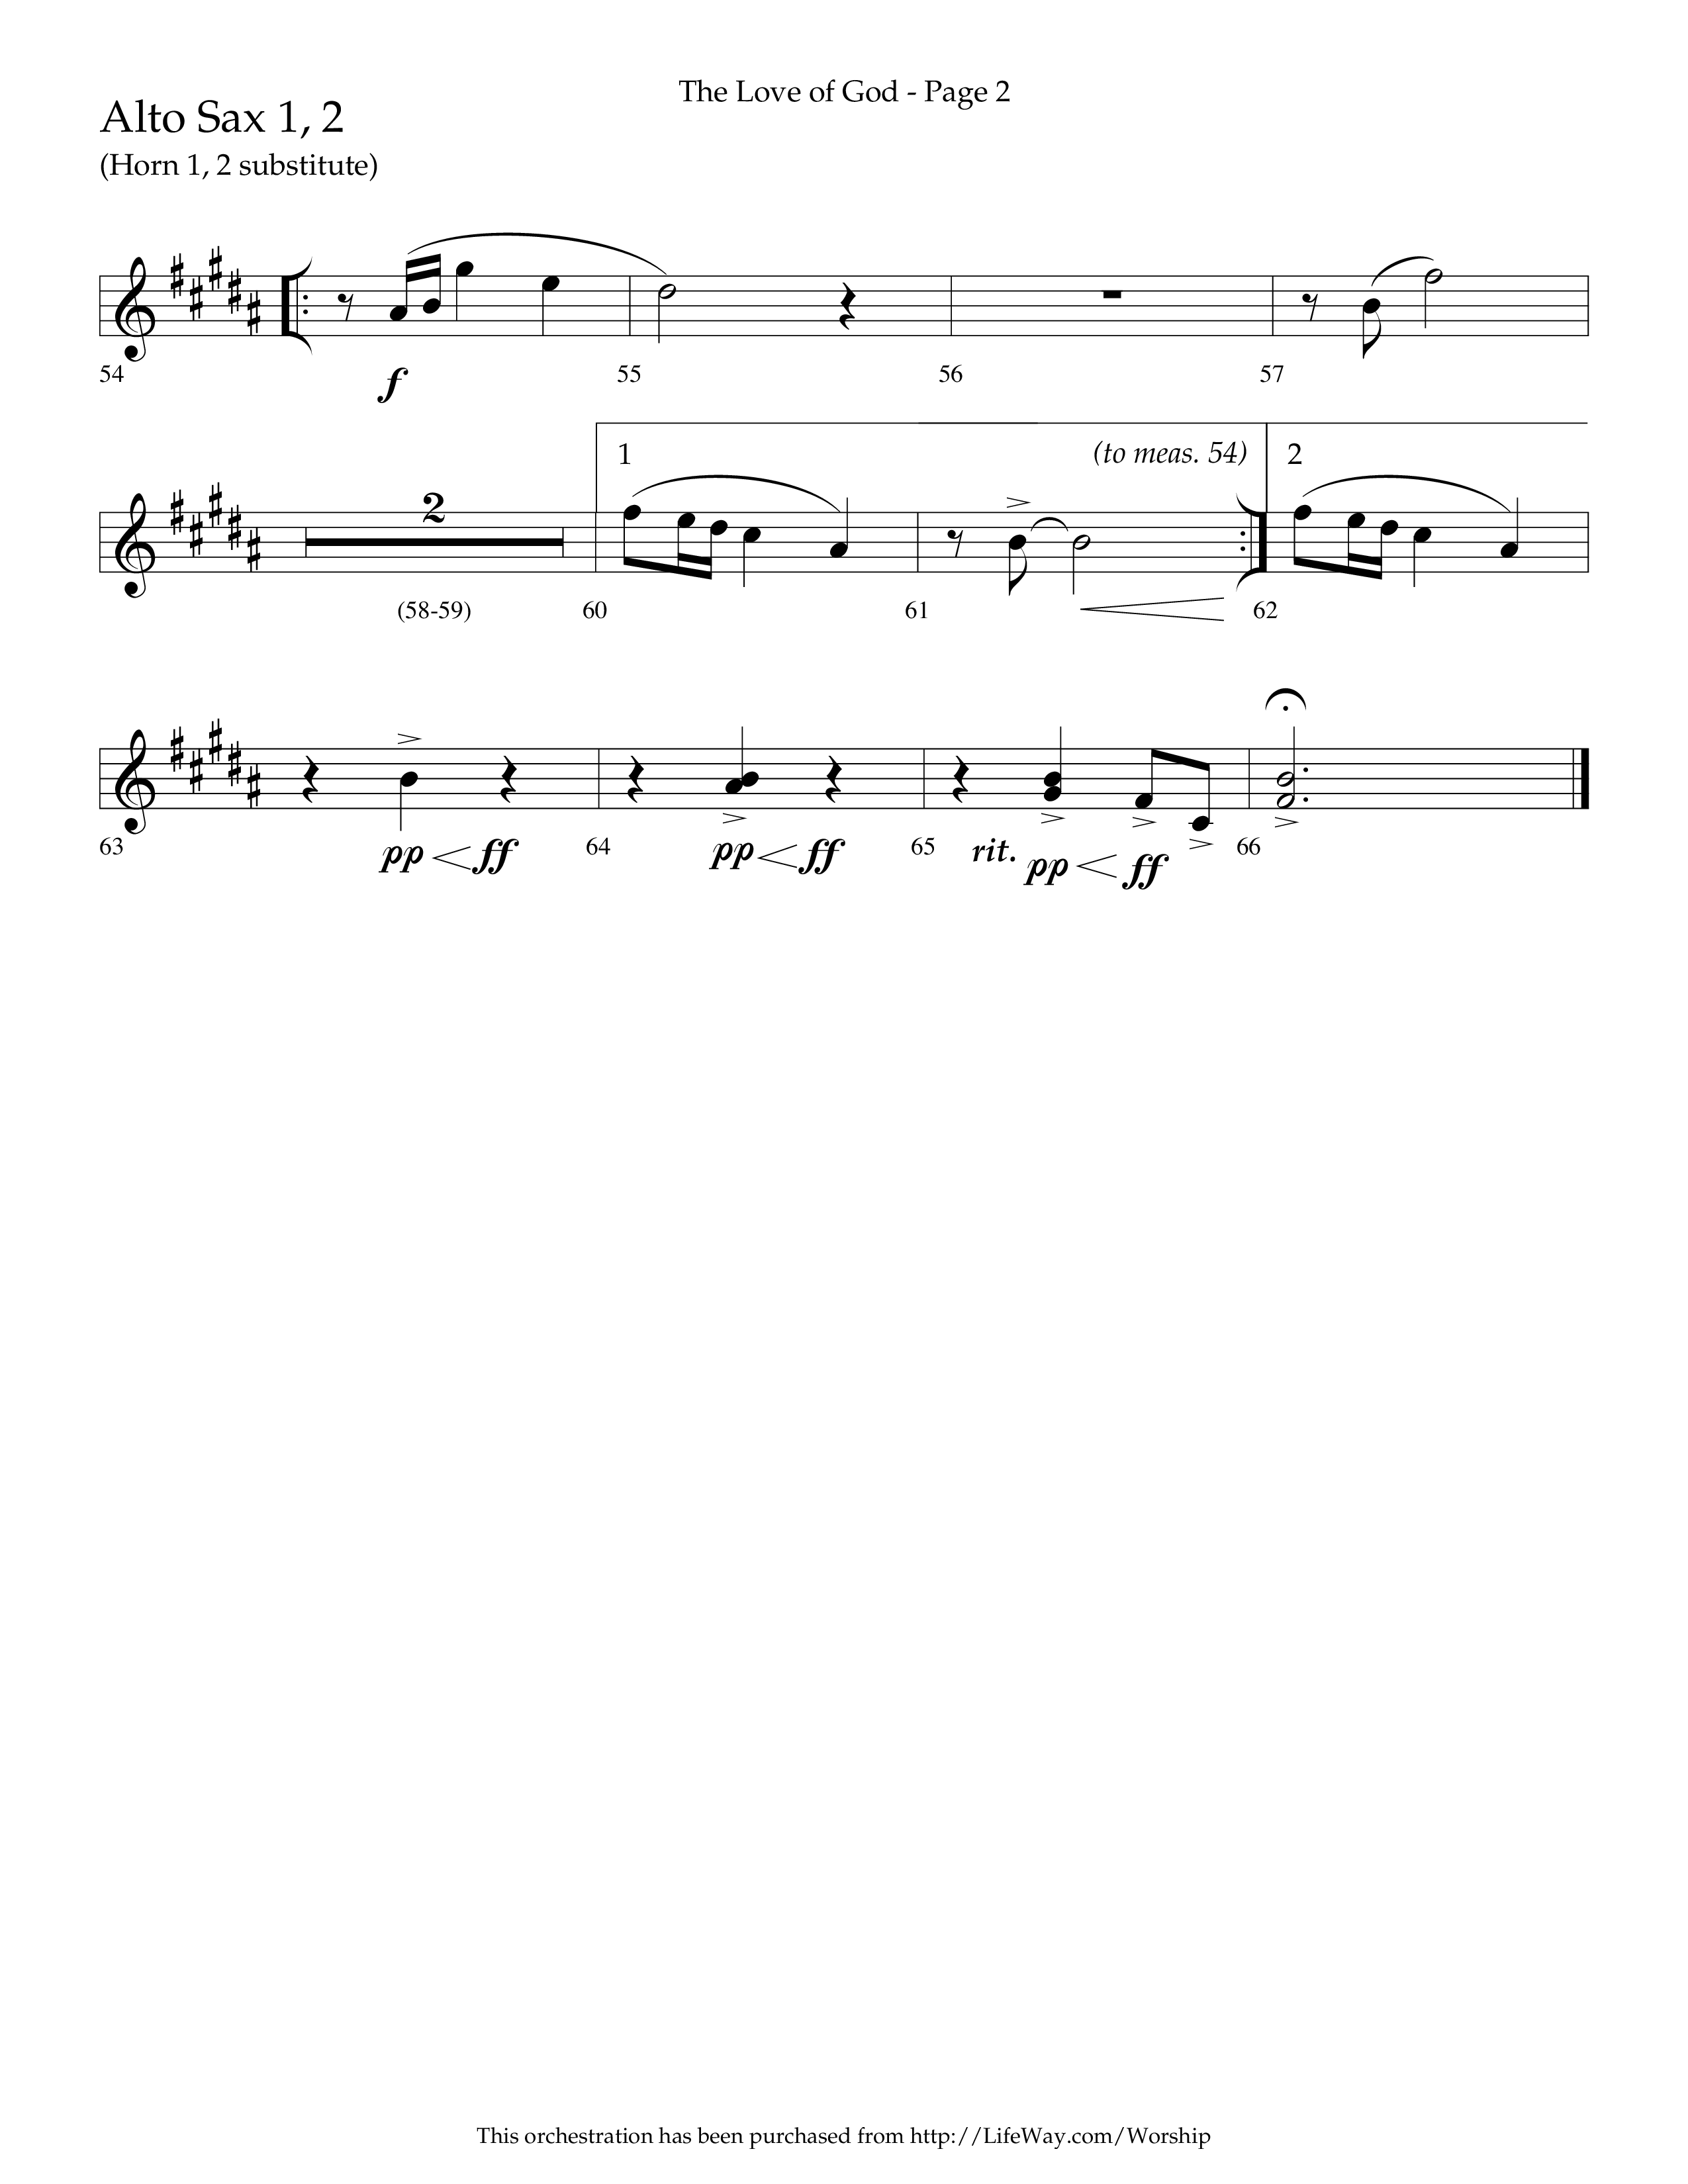 The Love of God (Choral Anthem SATB) Alto Sax 1/2 (Arr. Charlie Sinclair / Orch. Scott Harris / Lifeway Choral)